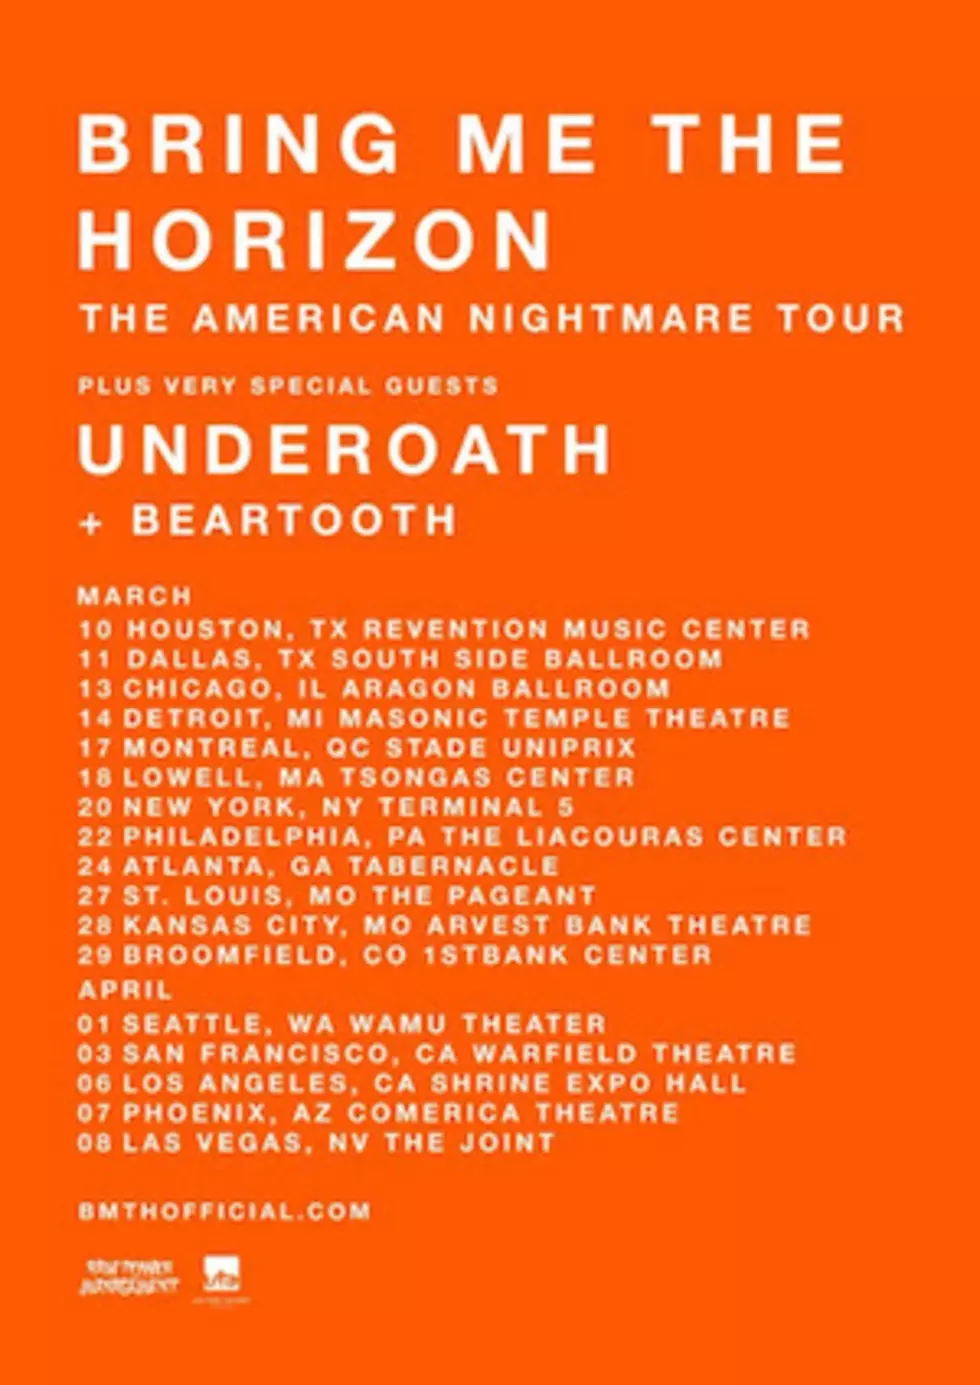 Bring Me the Horizon, Underoath + Beartooth Announce 2017 North American Tour